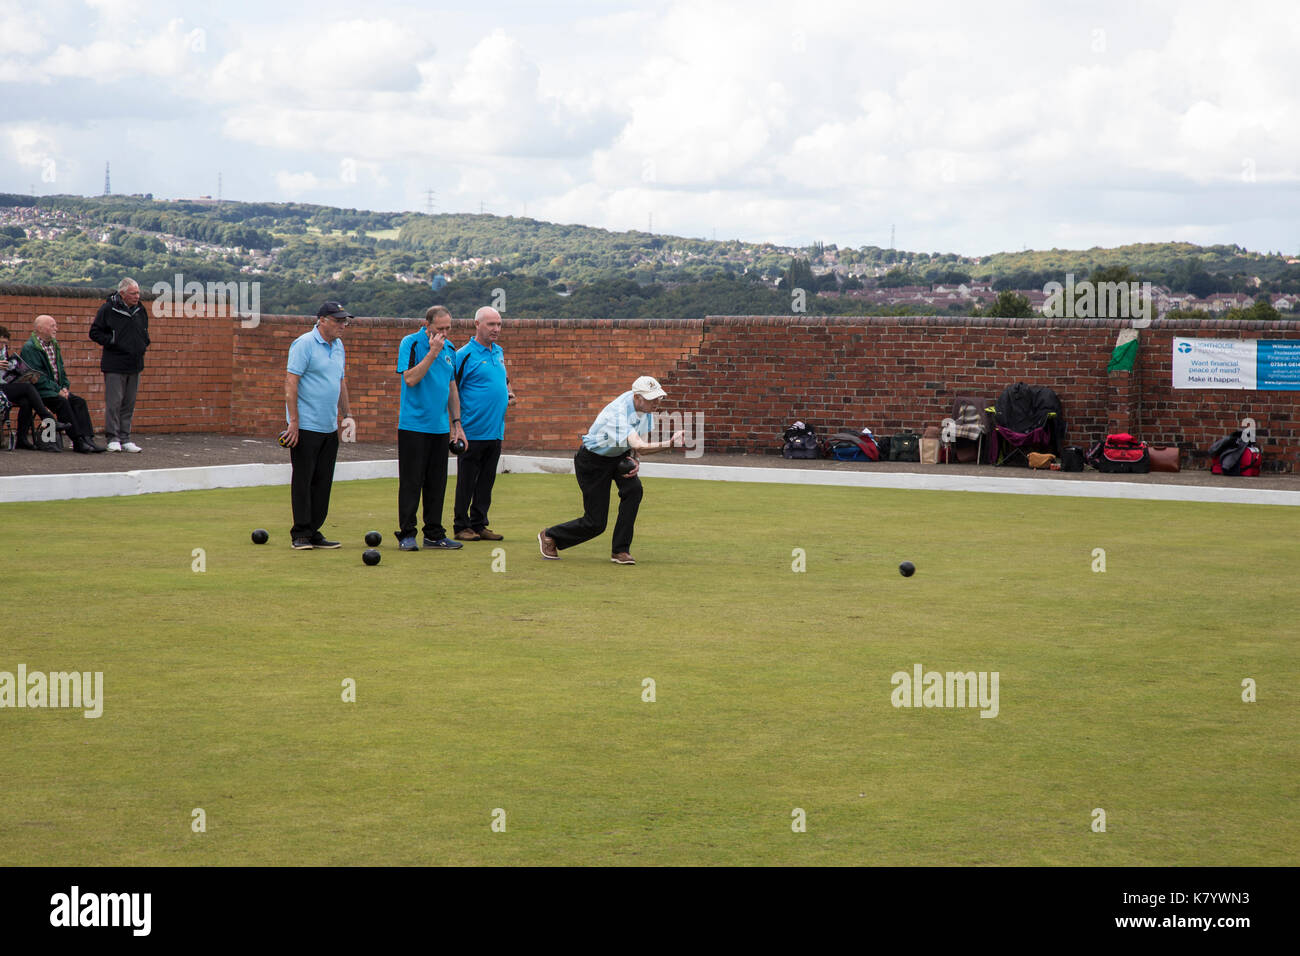 Crown Green Bowling championship in Huddersfield, West Yorkshire U.K. Stock Photo